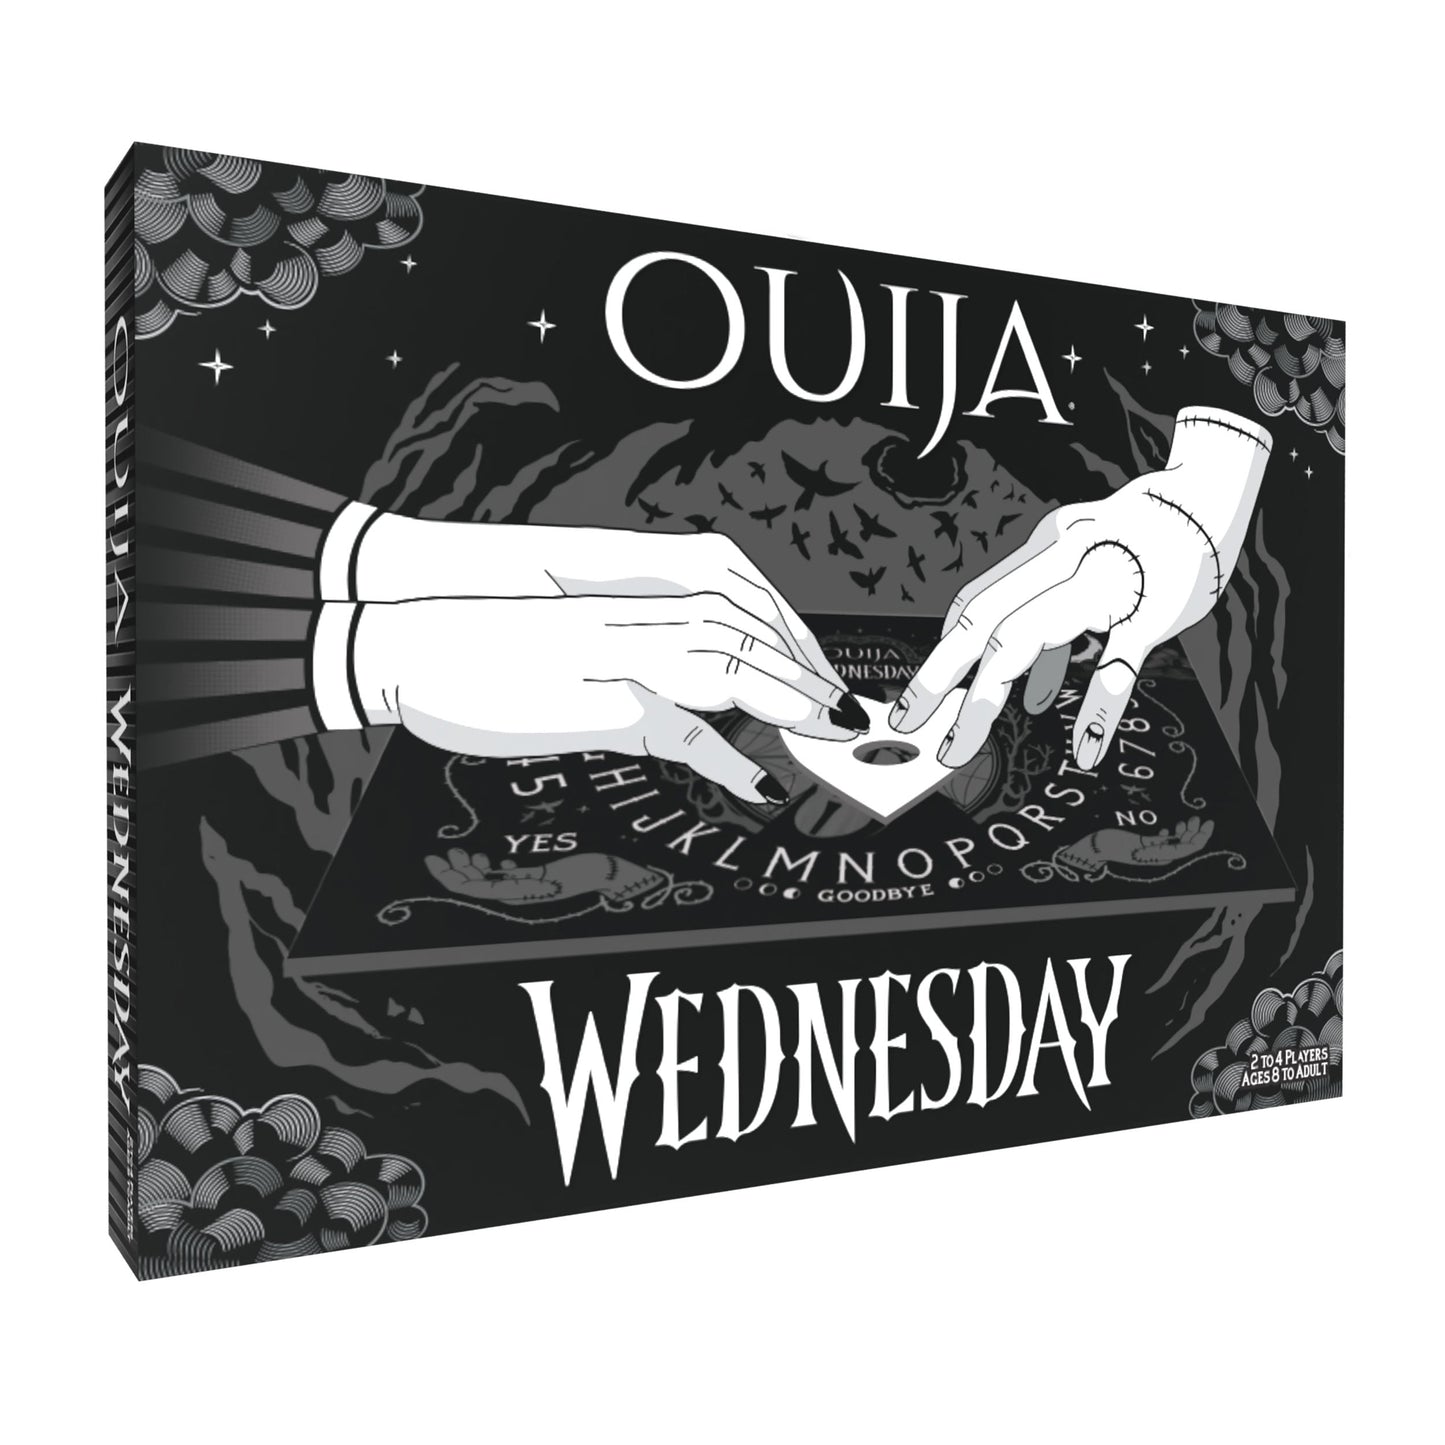 OUIJA®: Wednesday